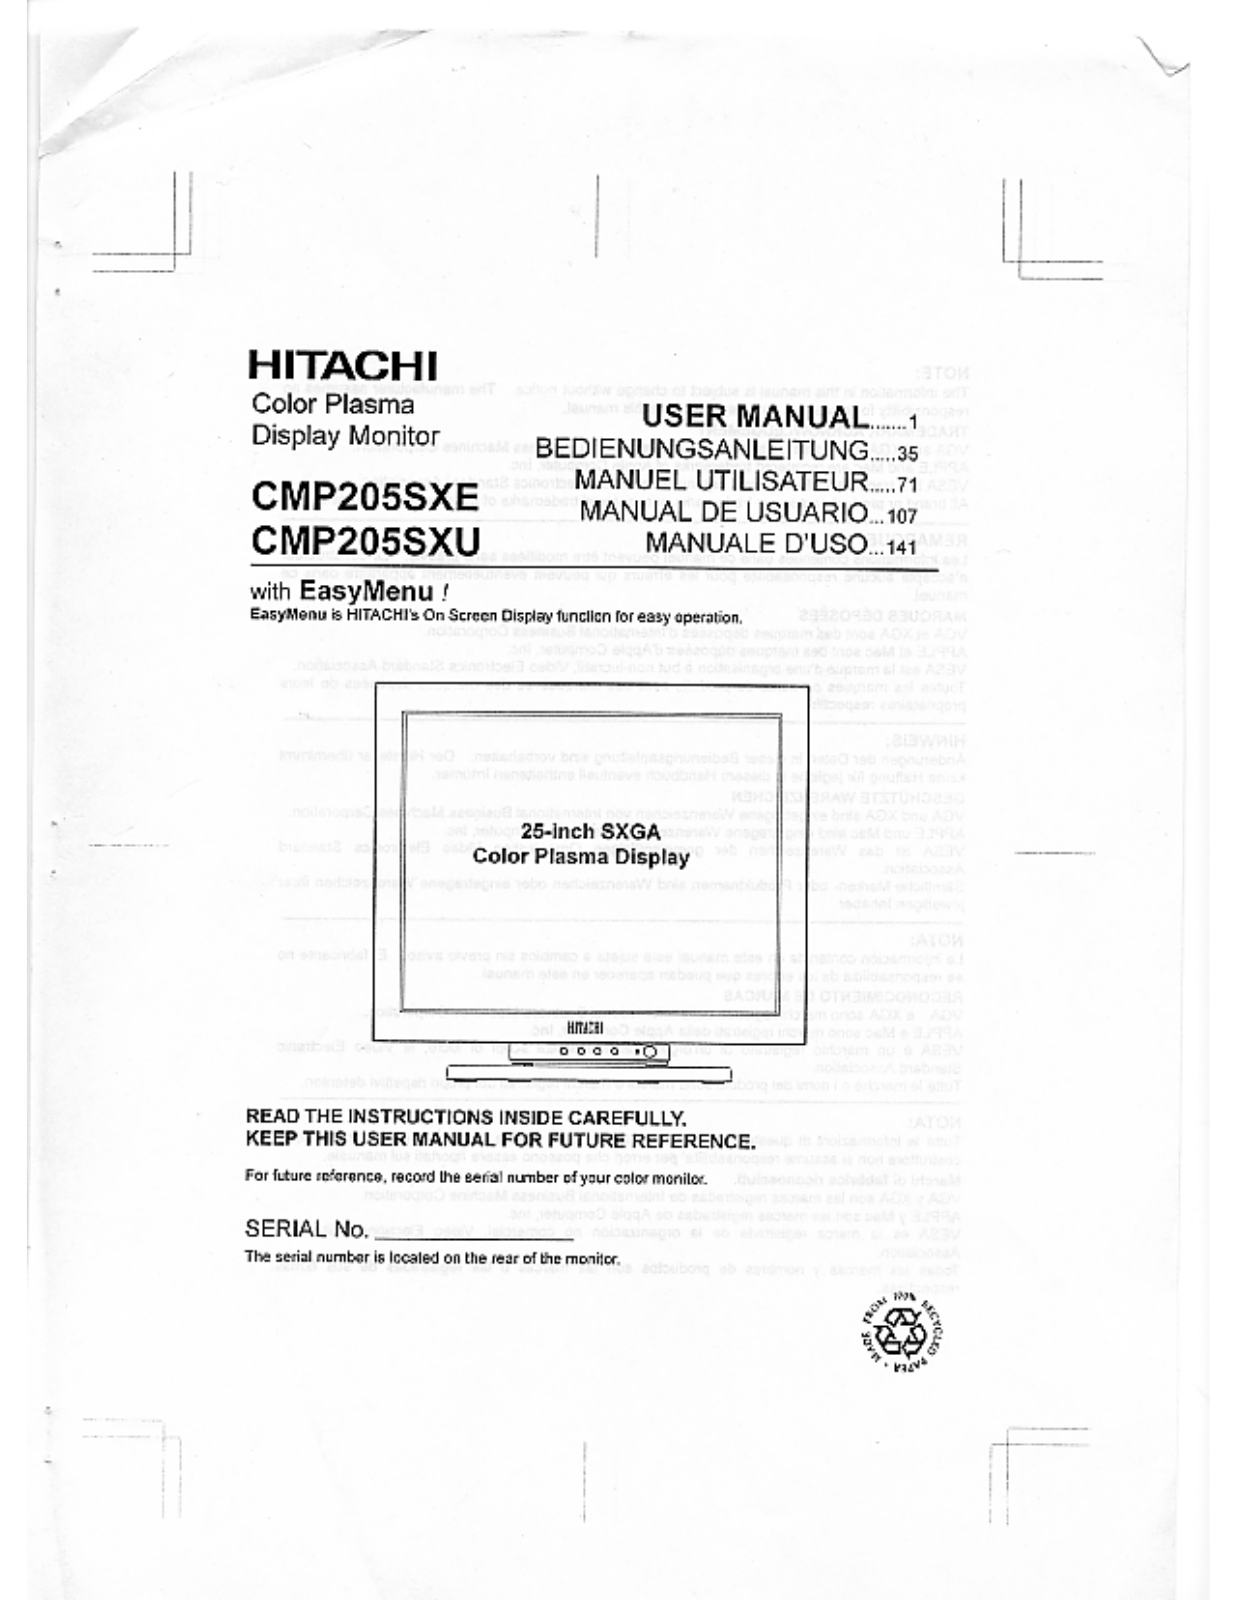 Hitachi CMP205SXU, CMP205SXE User Manual